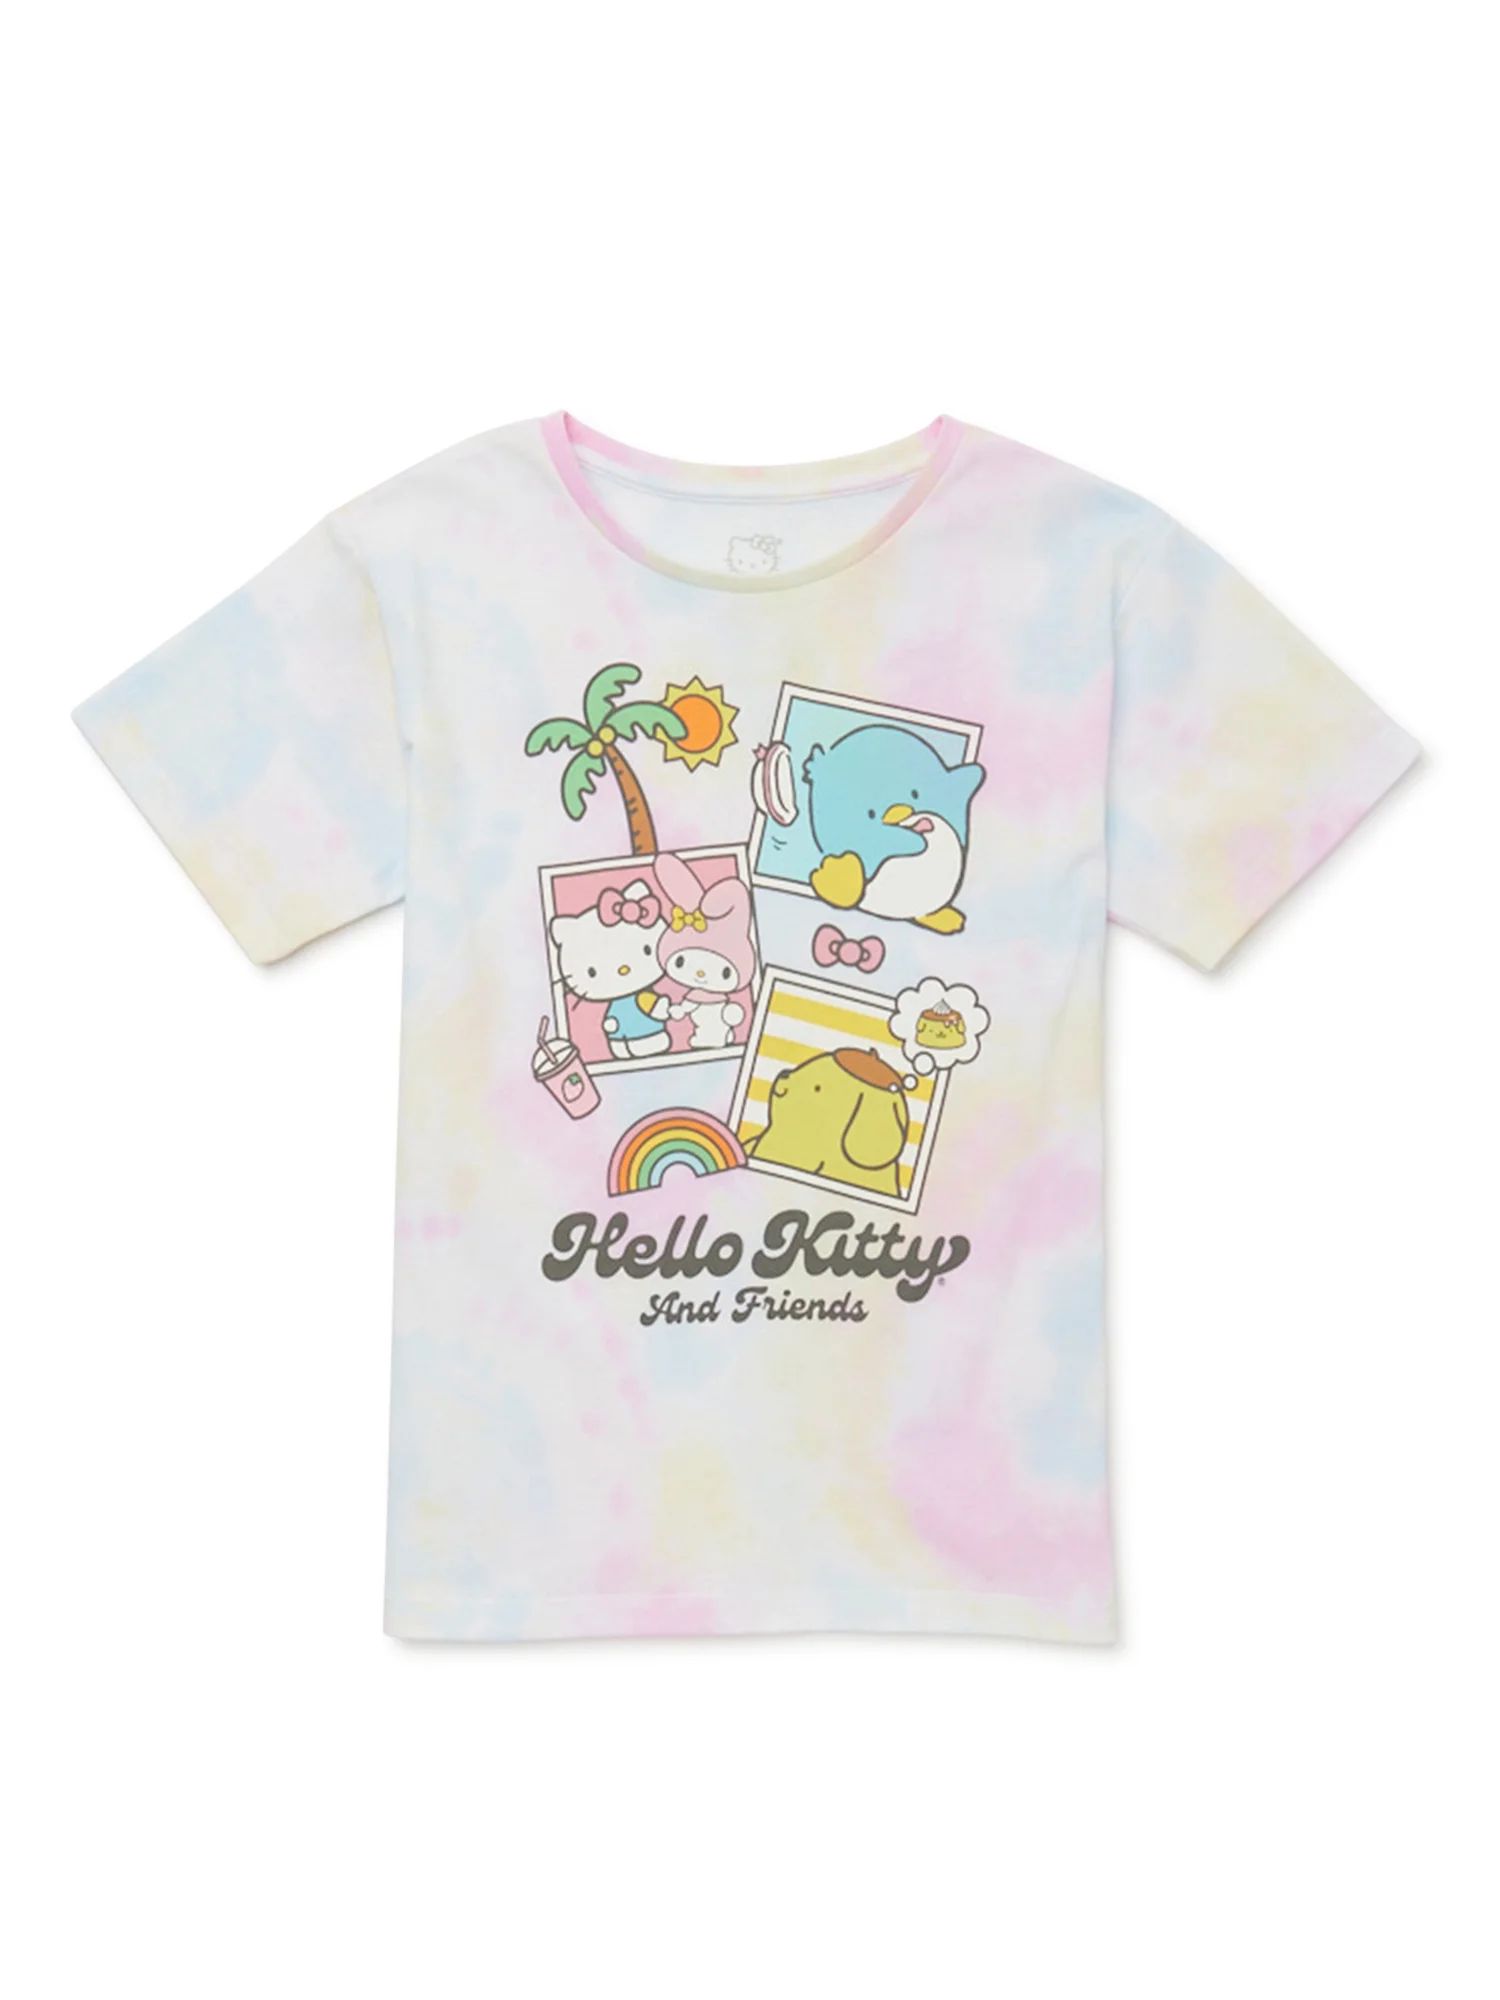 Sanrio Girls Hello Kitty and Friends, Crew Neck, Short Sleeve, Graphic T-Shirt, Sizes 4-16 | Walmart (US)